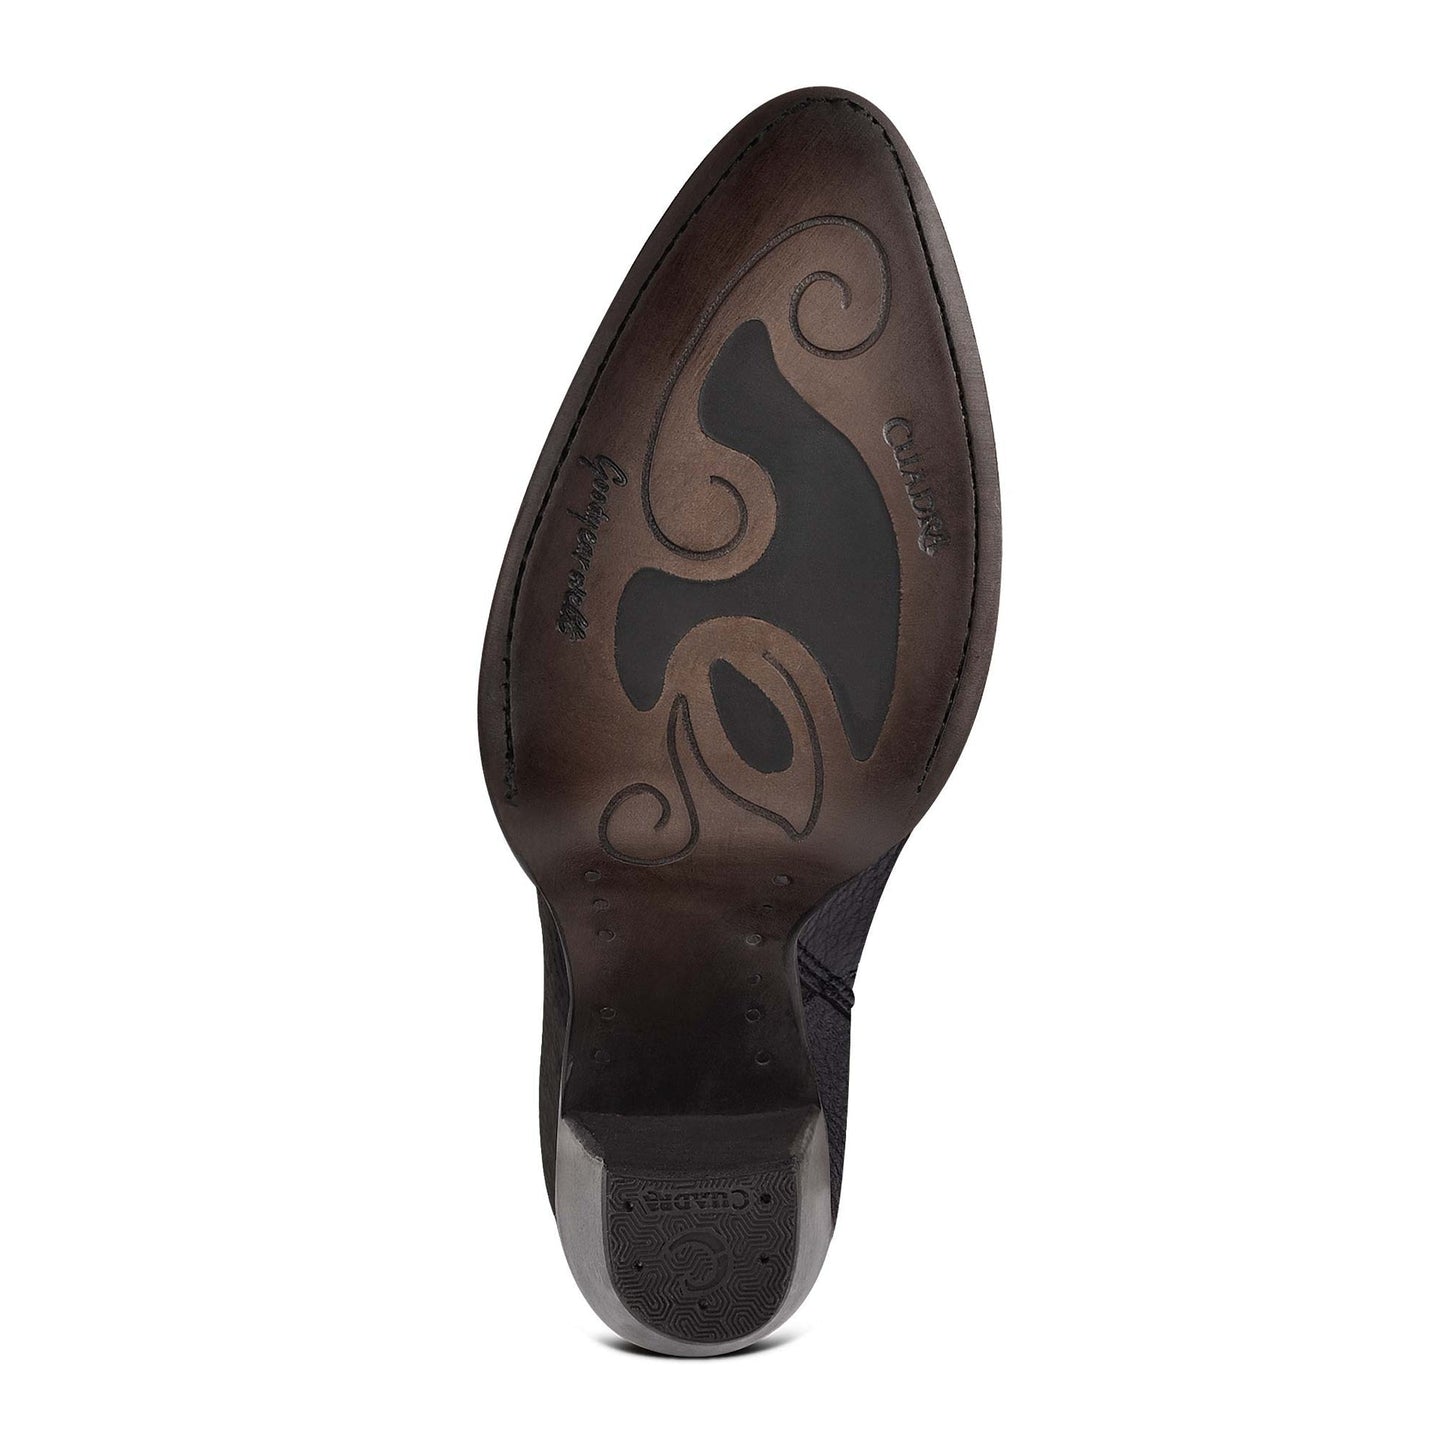 3F38RS - Cuadra black fashion Paris Texas leather ankle boots for women-CUADRA-Kuet-Cuadra-Boots